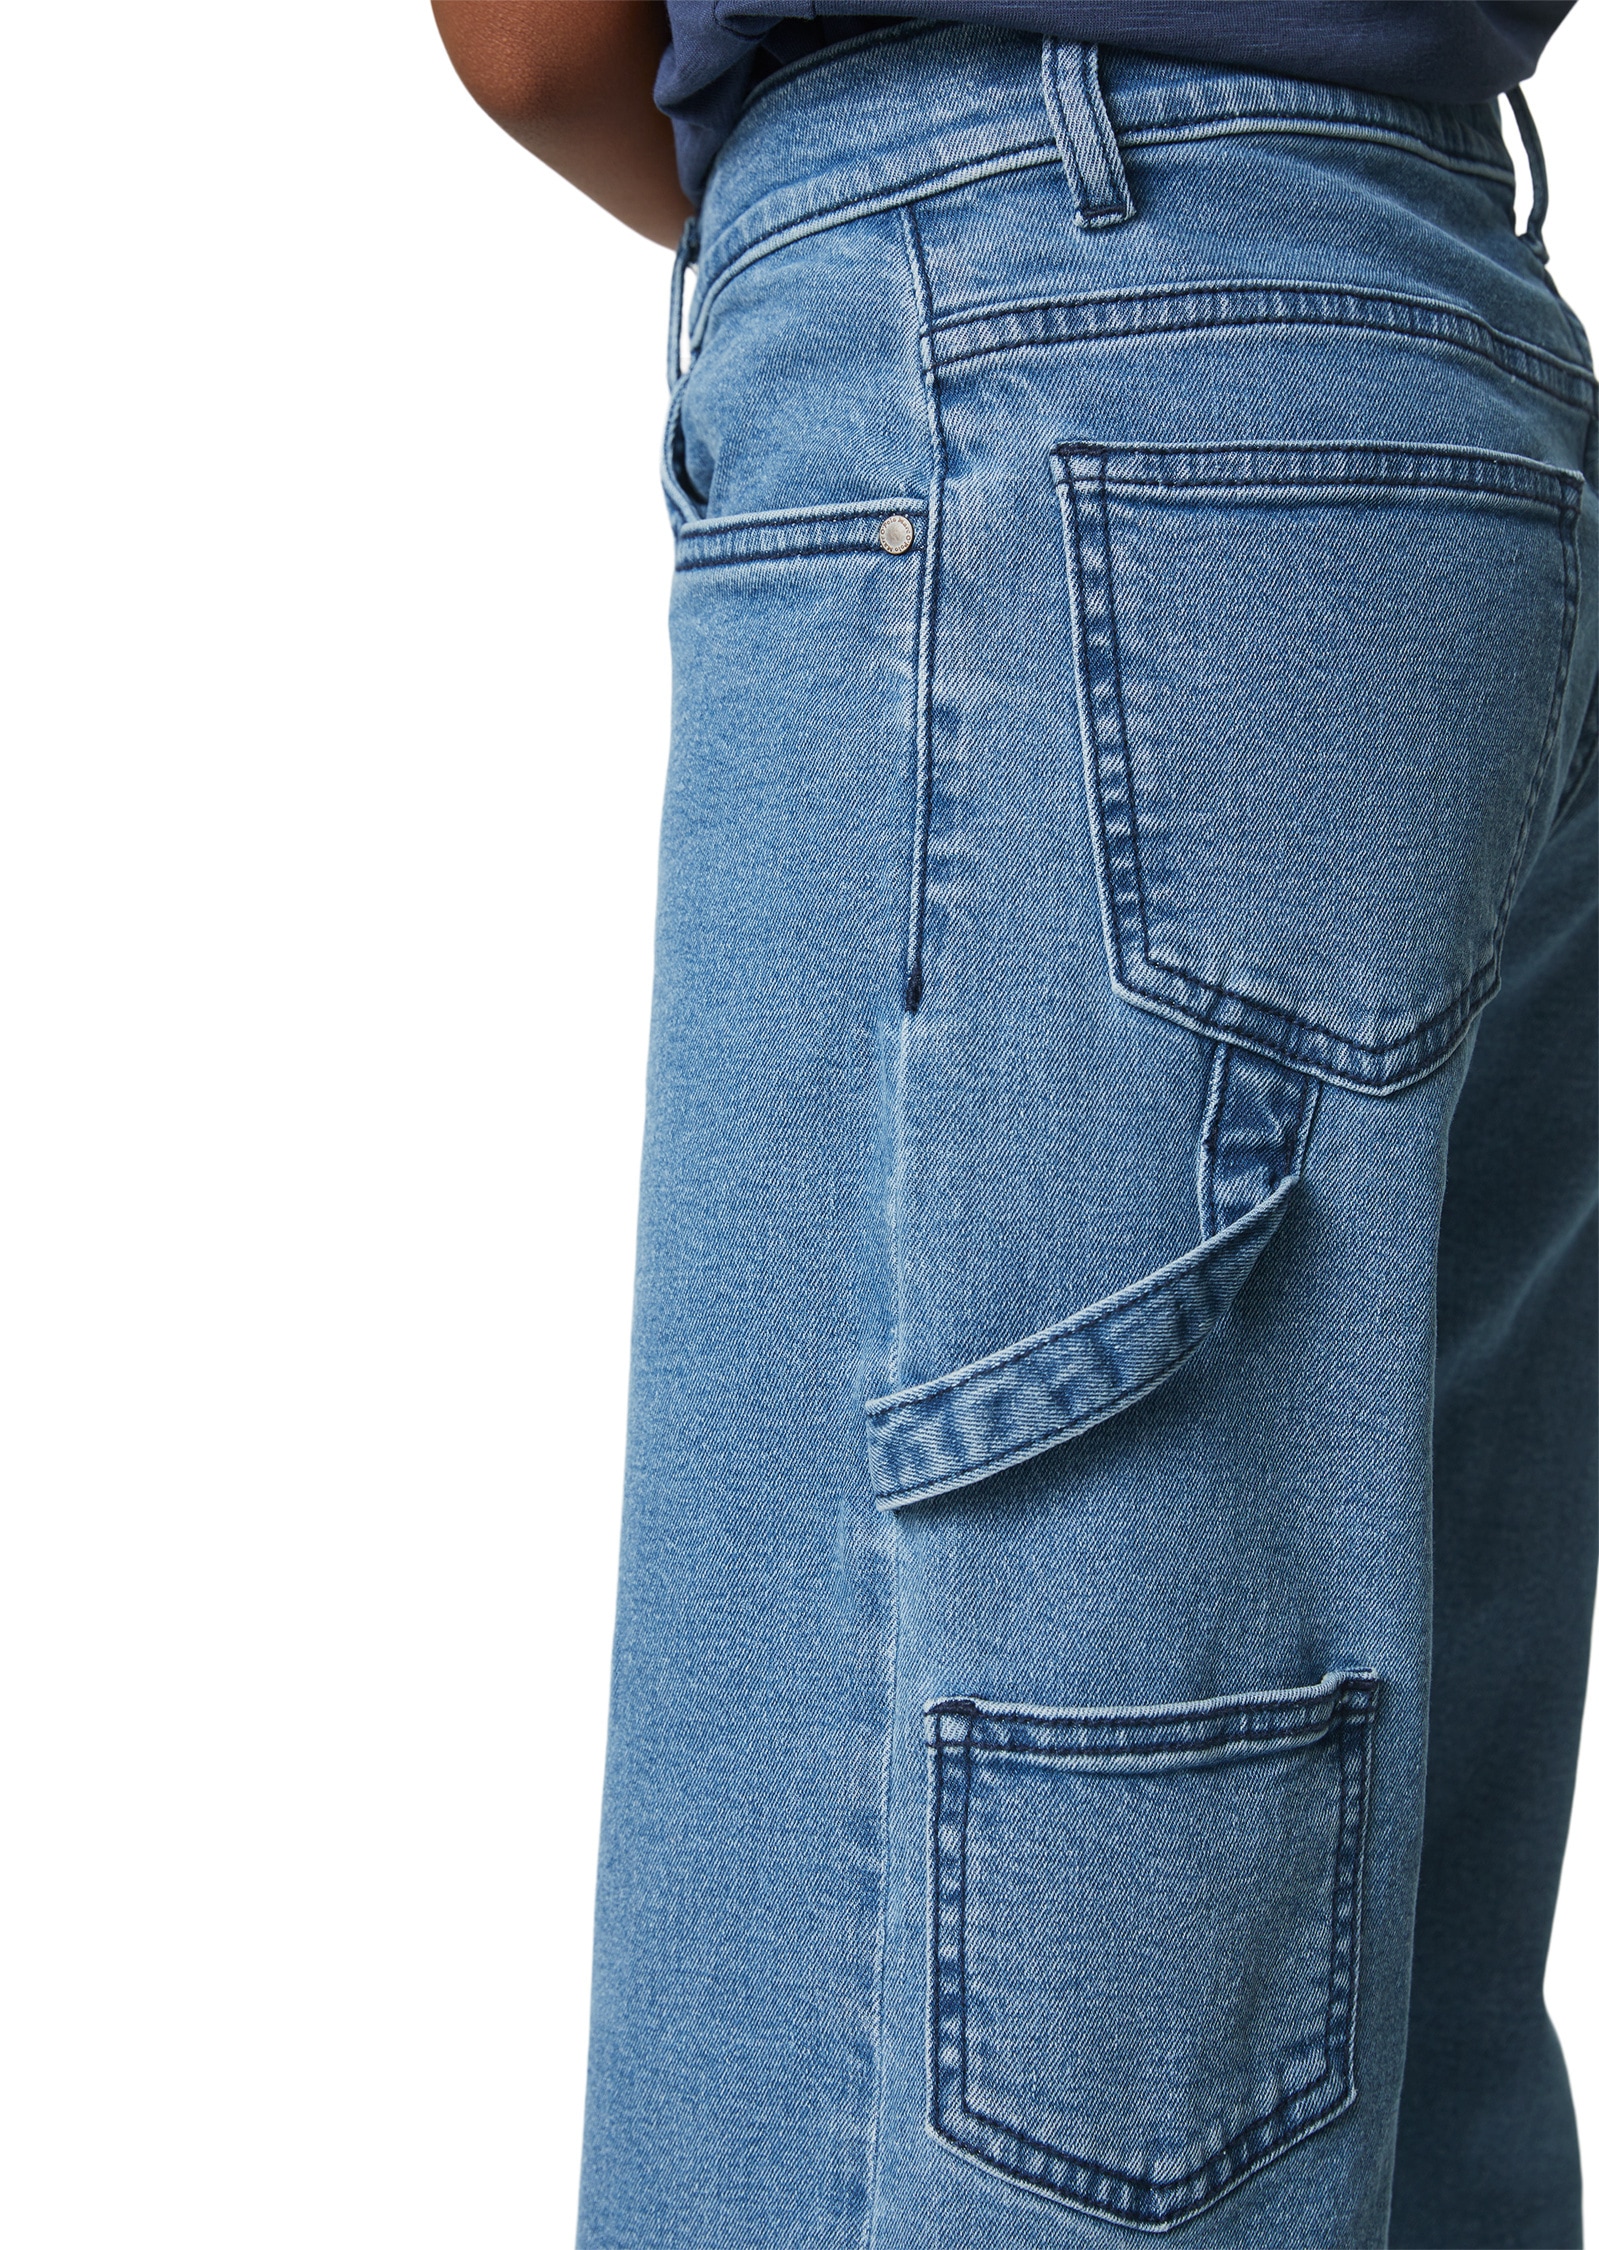 Marc O'Polo 5-Pocket-Jeans »mit weitem Bein«